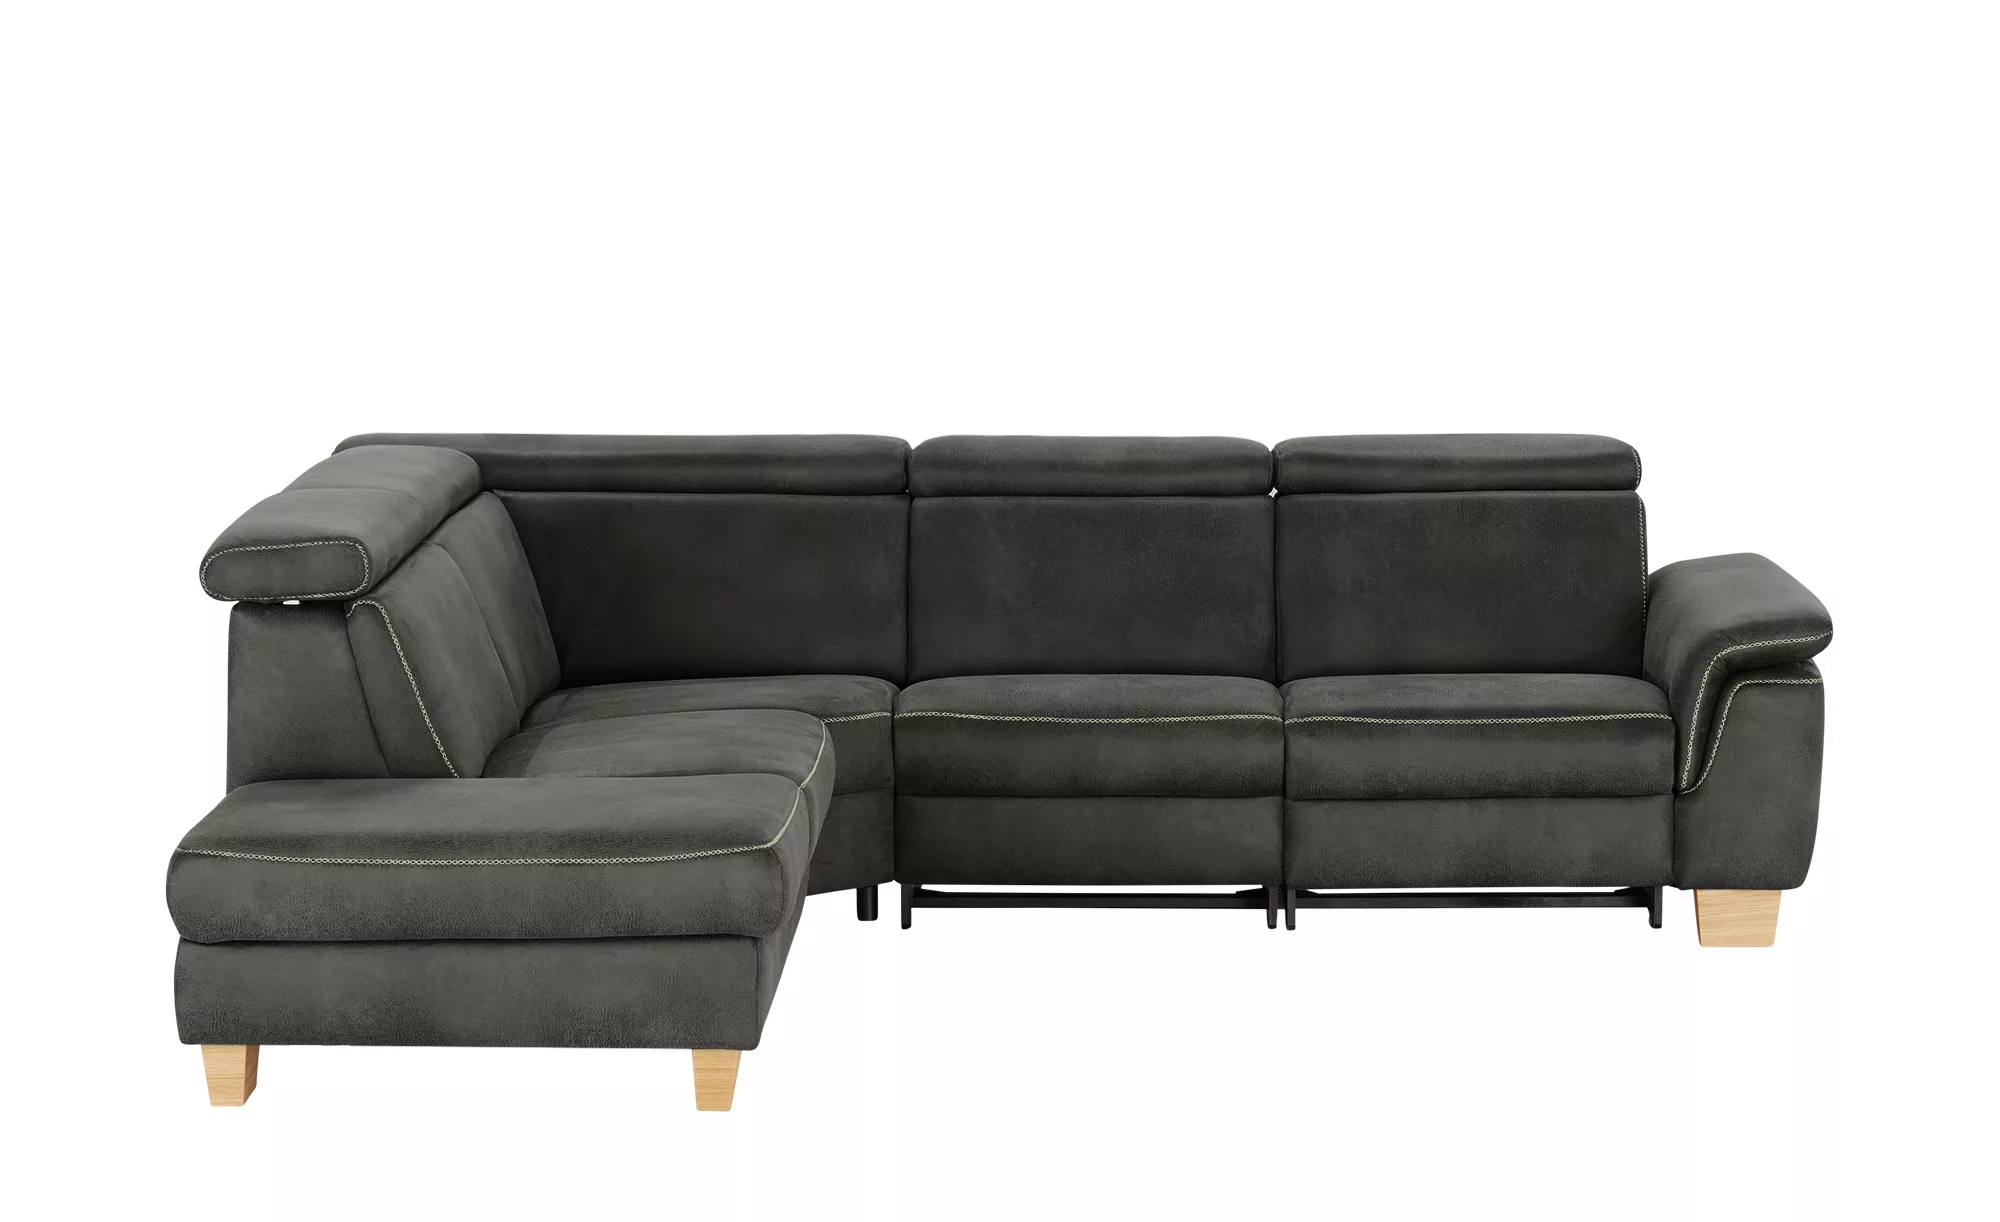 Mein Sofa bold Ecksofa  Beata - grau - 270 cm - 80 cm - 233 cm - Polstermöb günstig online kaufen